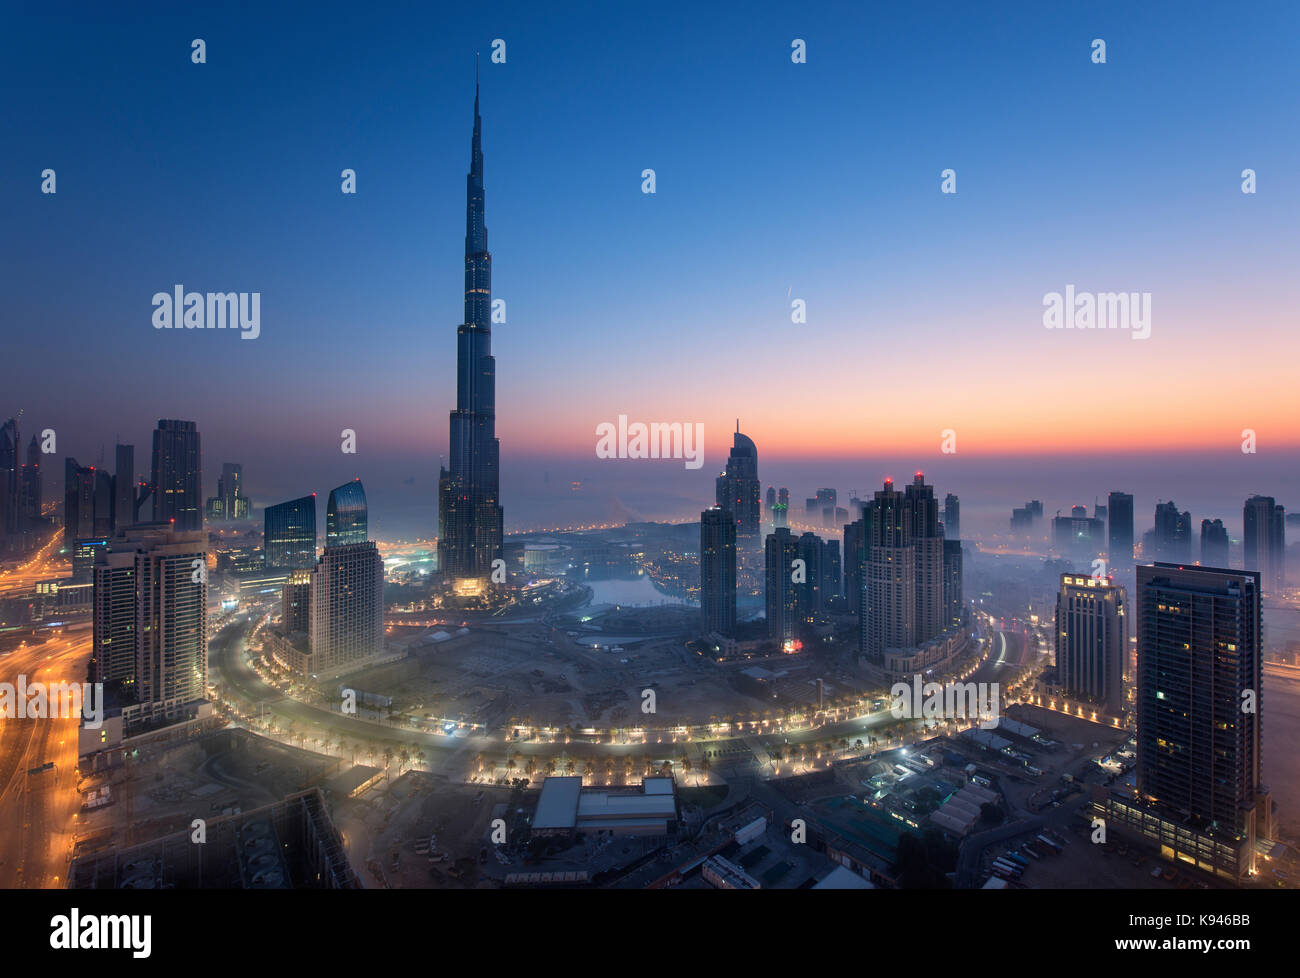 Cityscape of Dubai, United Arab Emirates at dusk, with the Burj Khalifa skyscraper and illuminated buildings in the foreground. Stock Photo